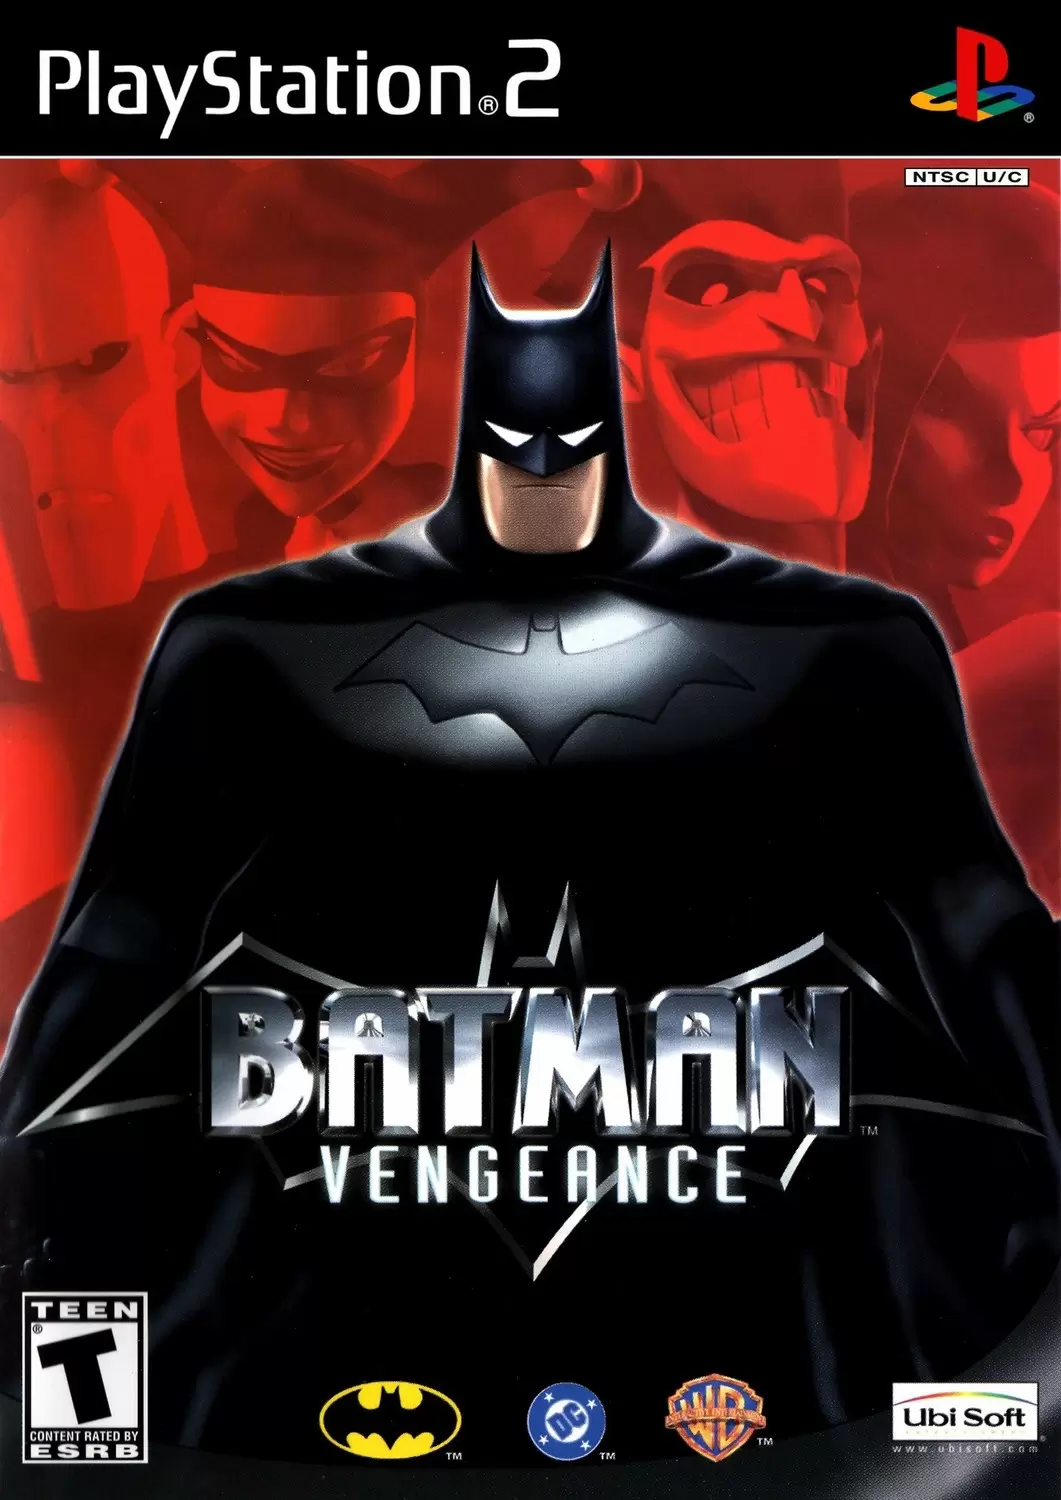 PS2 Games - Batman: Vengeance